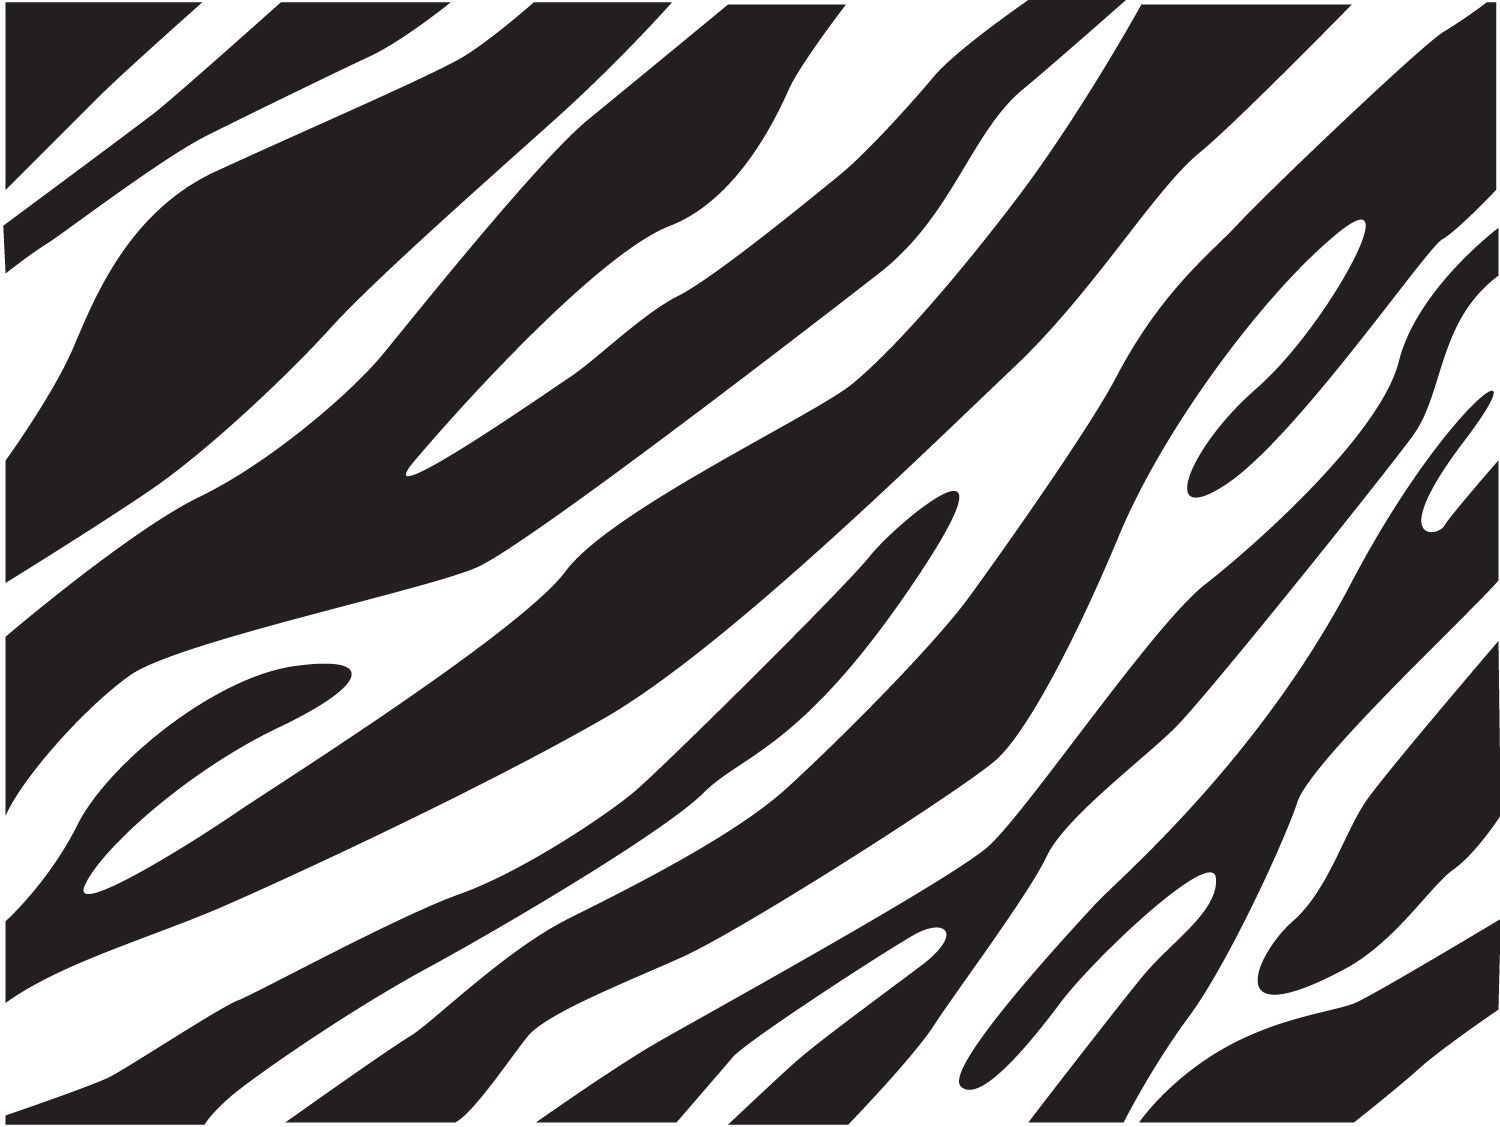 Free Black And White Zebra Wallpaper, Download Free Clip Art, Free Clip Art on Clipart Library